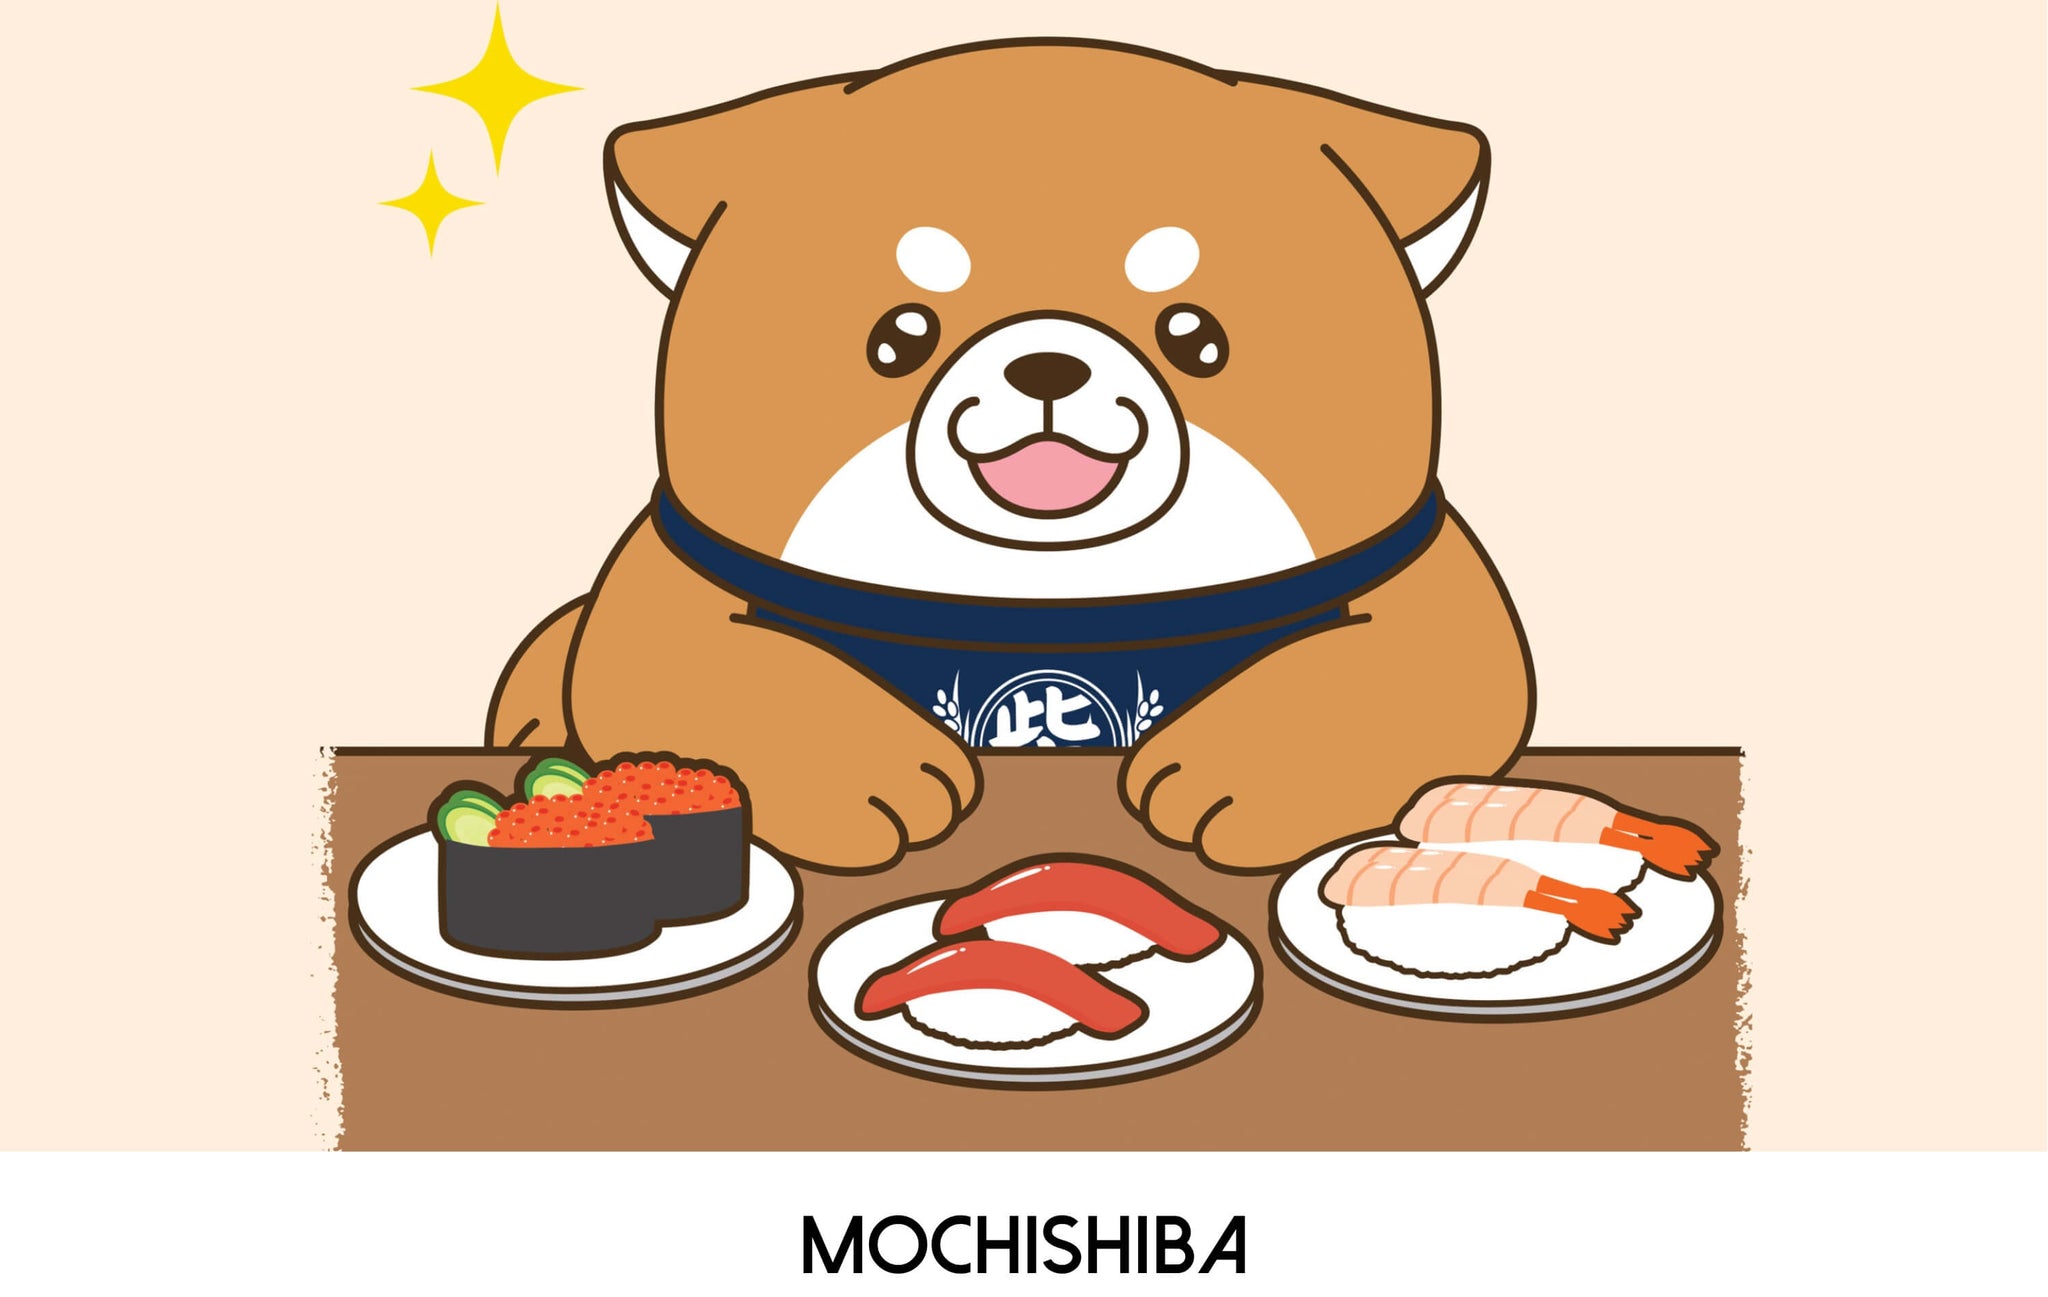 Learn more about Japanese artist Mochishiba.